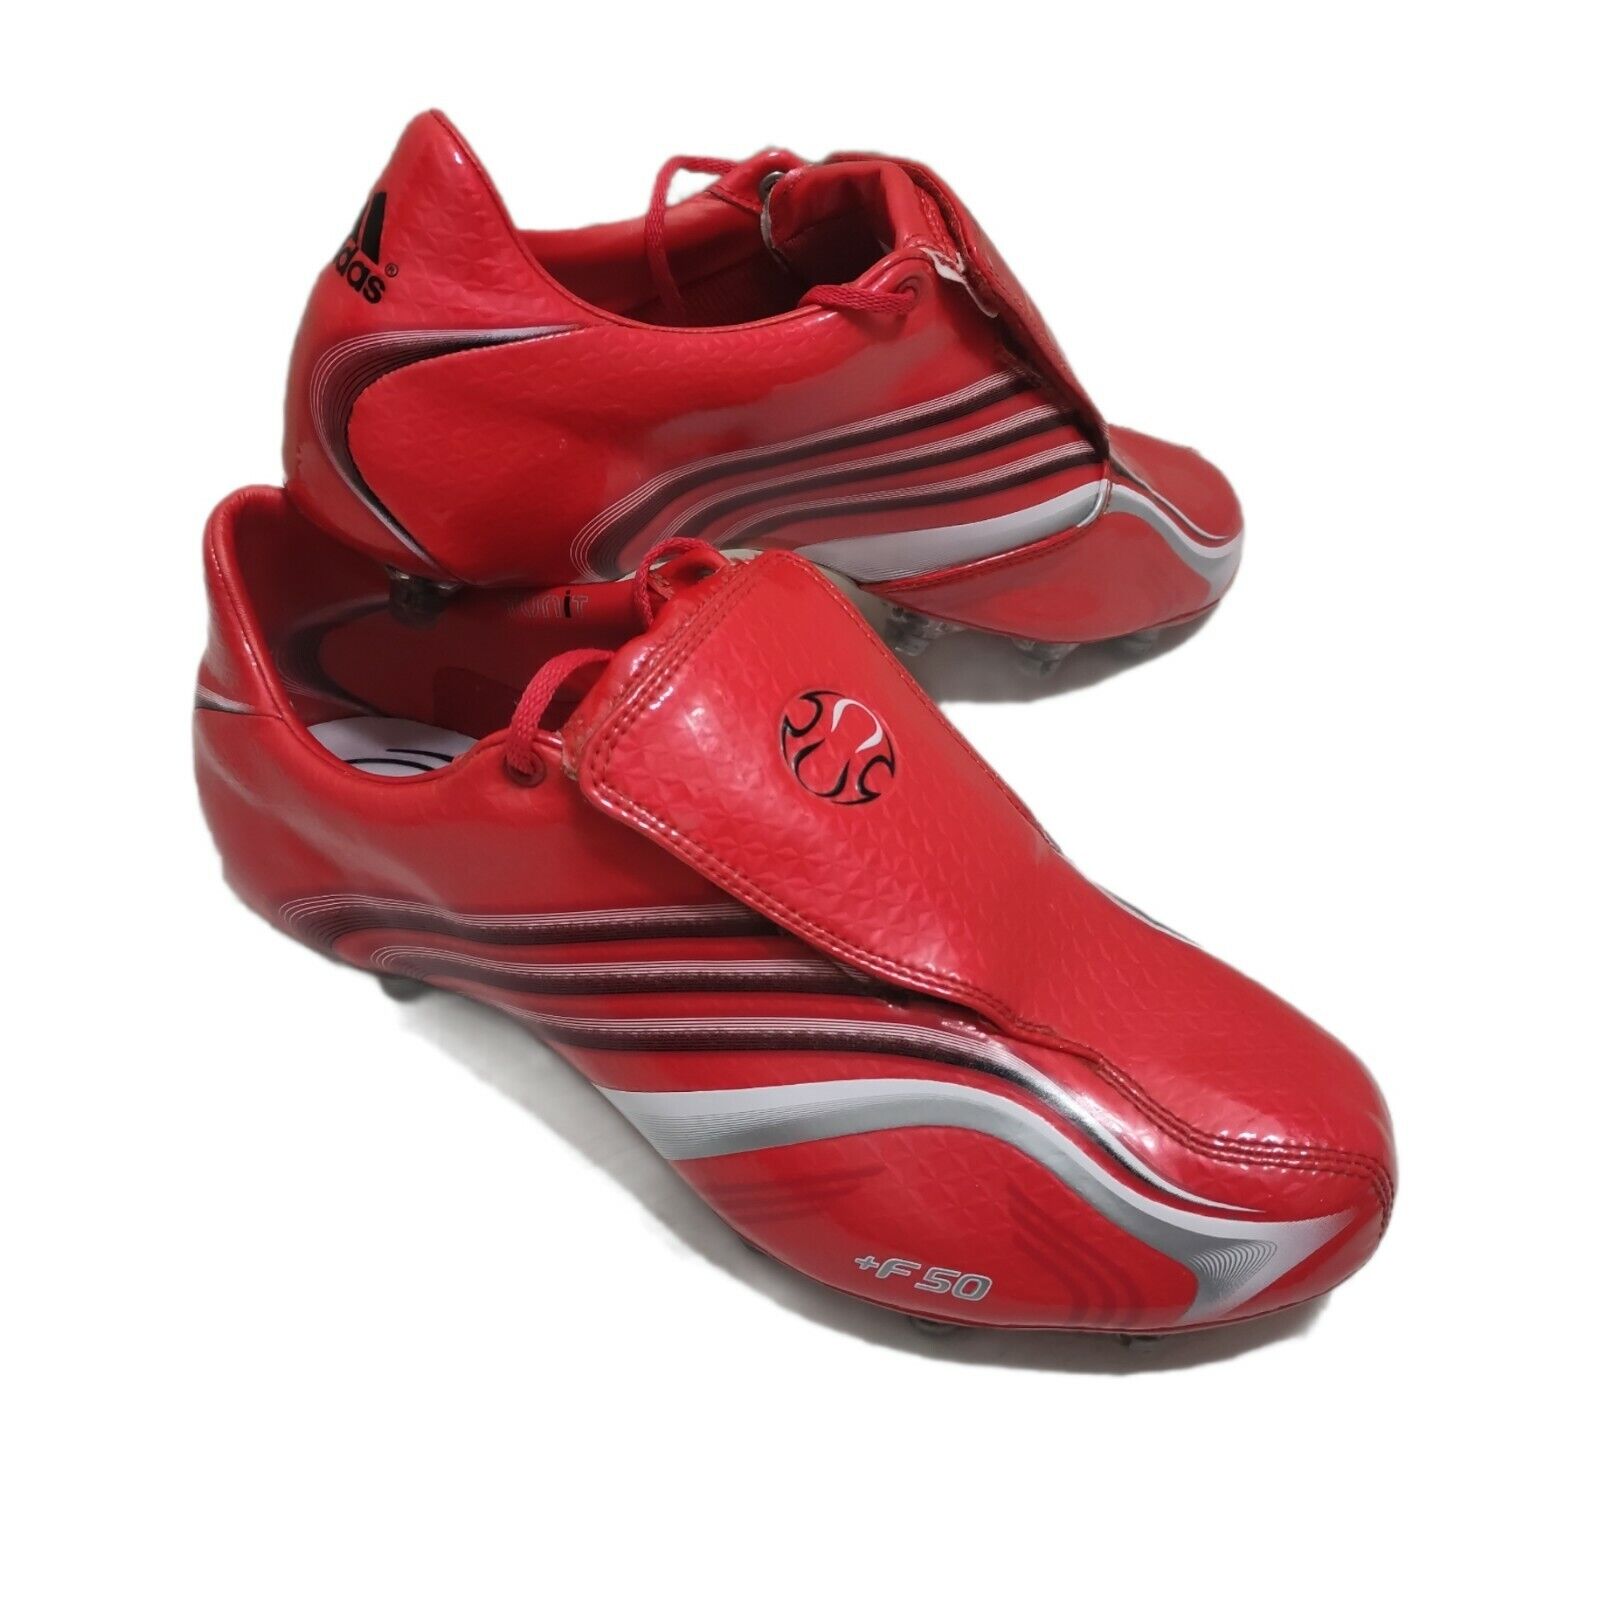 Details zu  Rare ADIDAS +F50.6 Tunit Football Boots Red Comfort 2006 FG Size UK 8.5 EU 42 Sonderpreis neue Arbeit